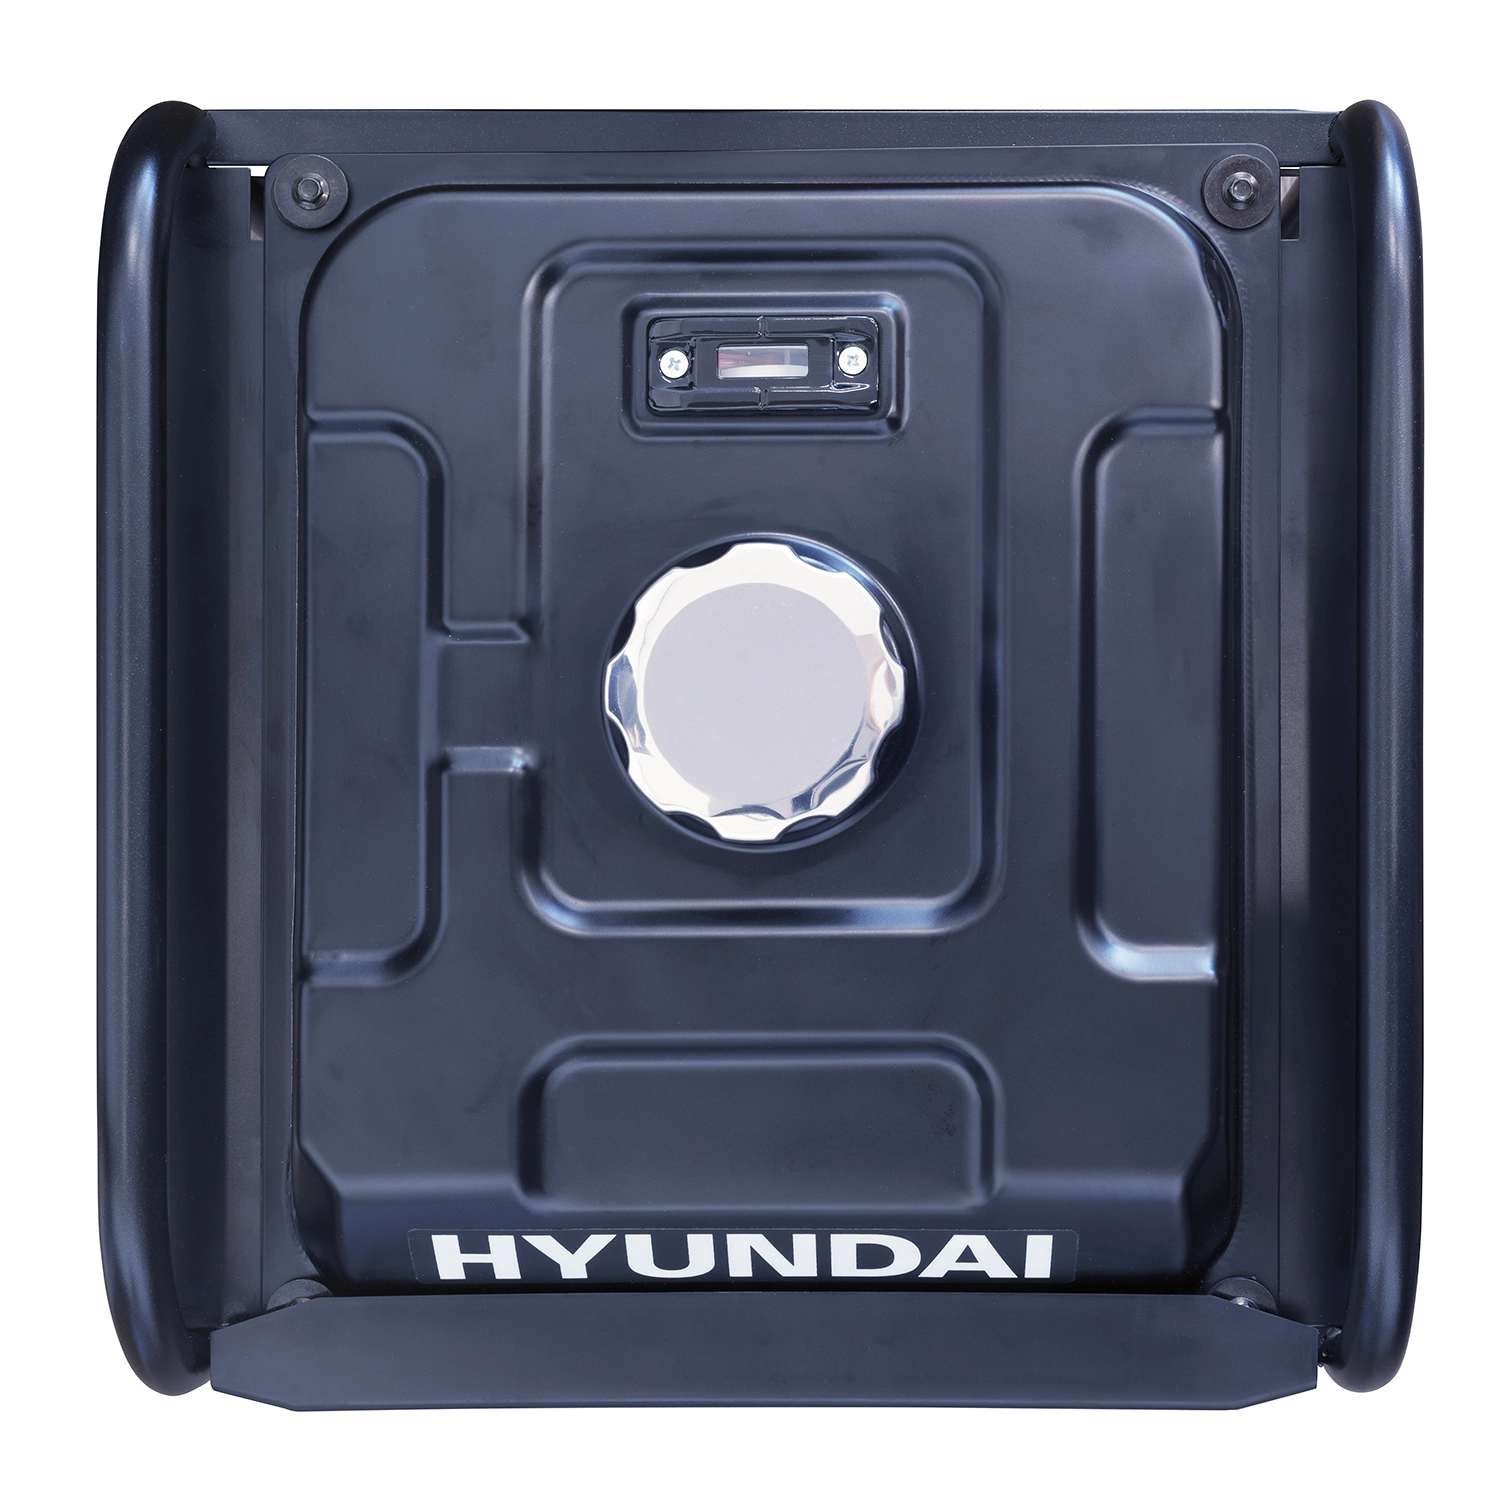 Hyundai 55017 - convertergenerator  - 3200W - 212cc - OHV motor